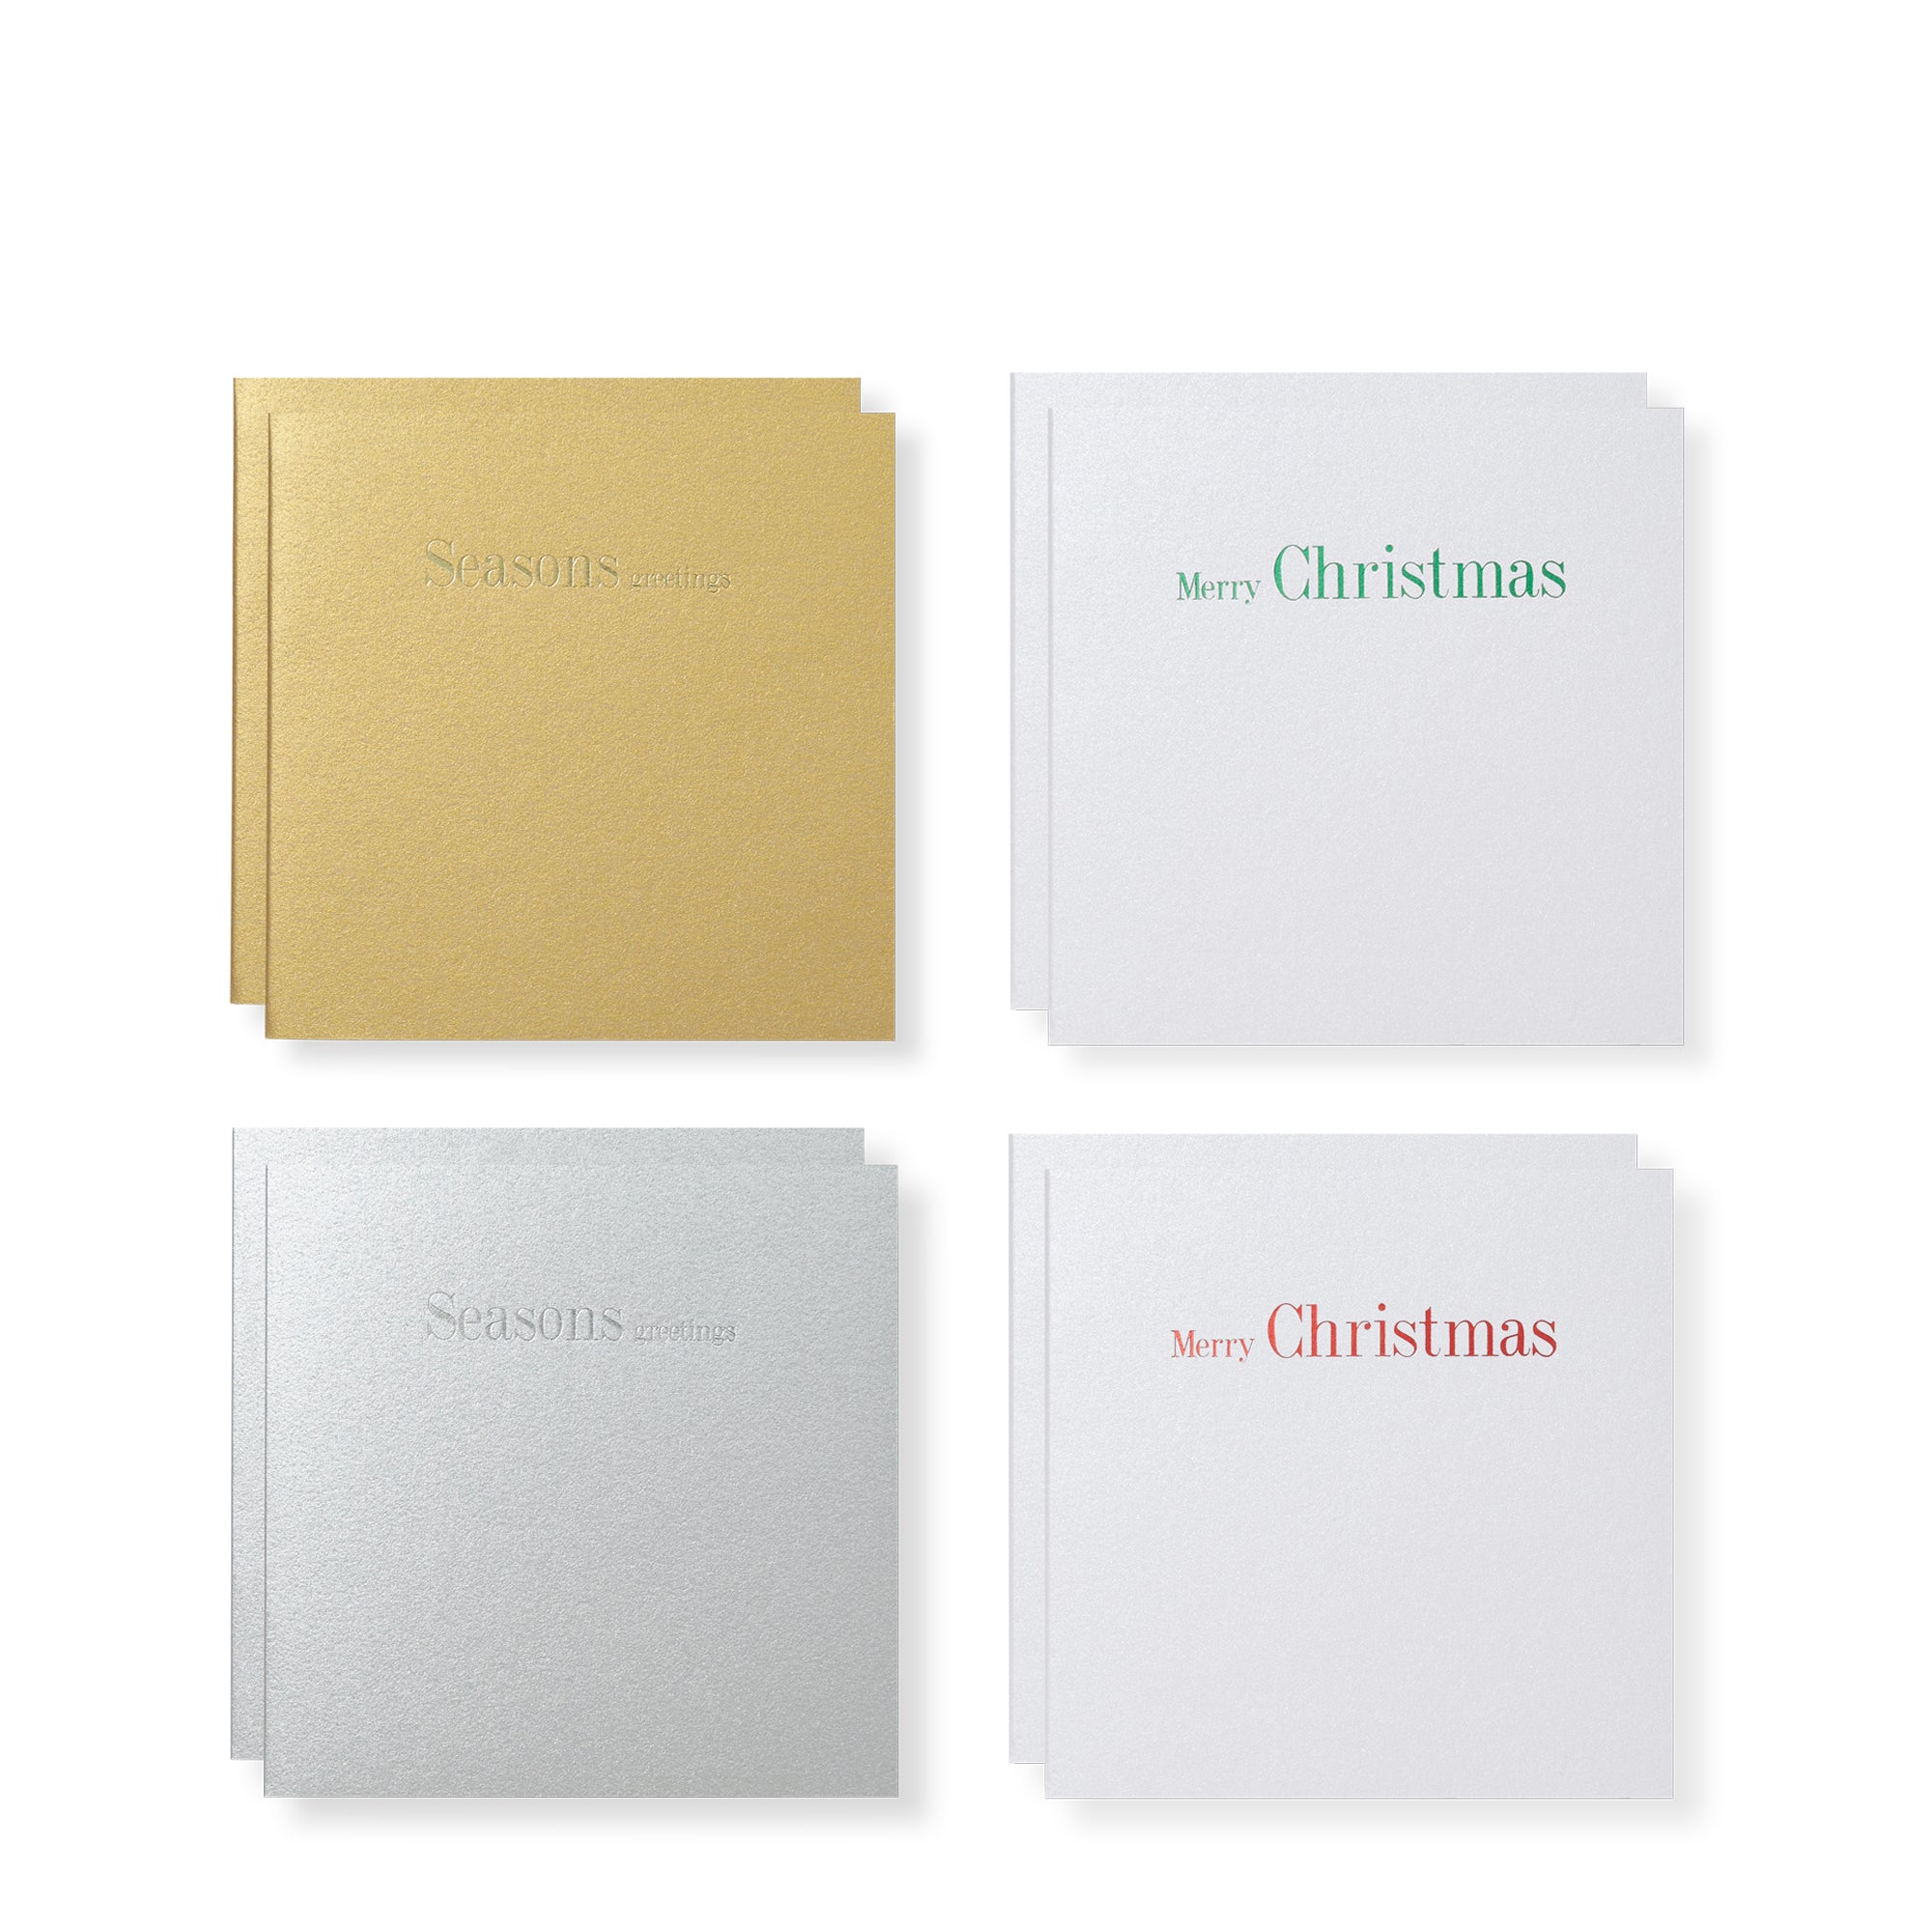 Merry Christmas, Seasons Greetings Mini Cards, Set of 8